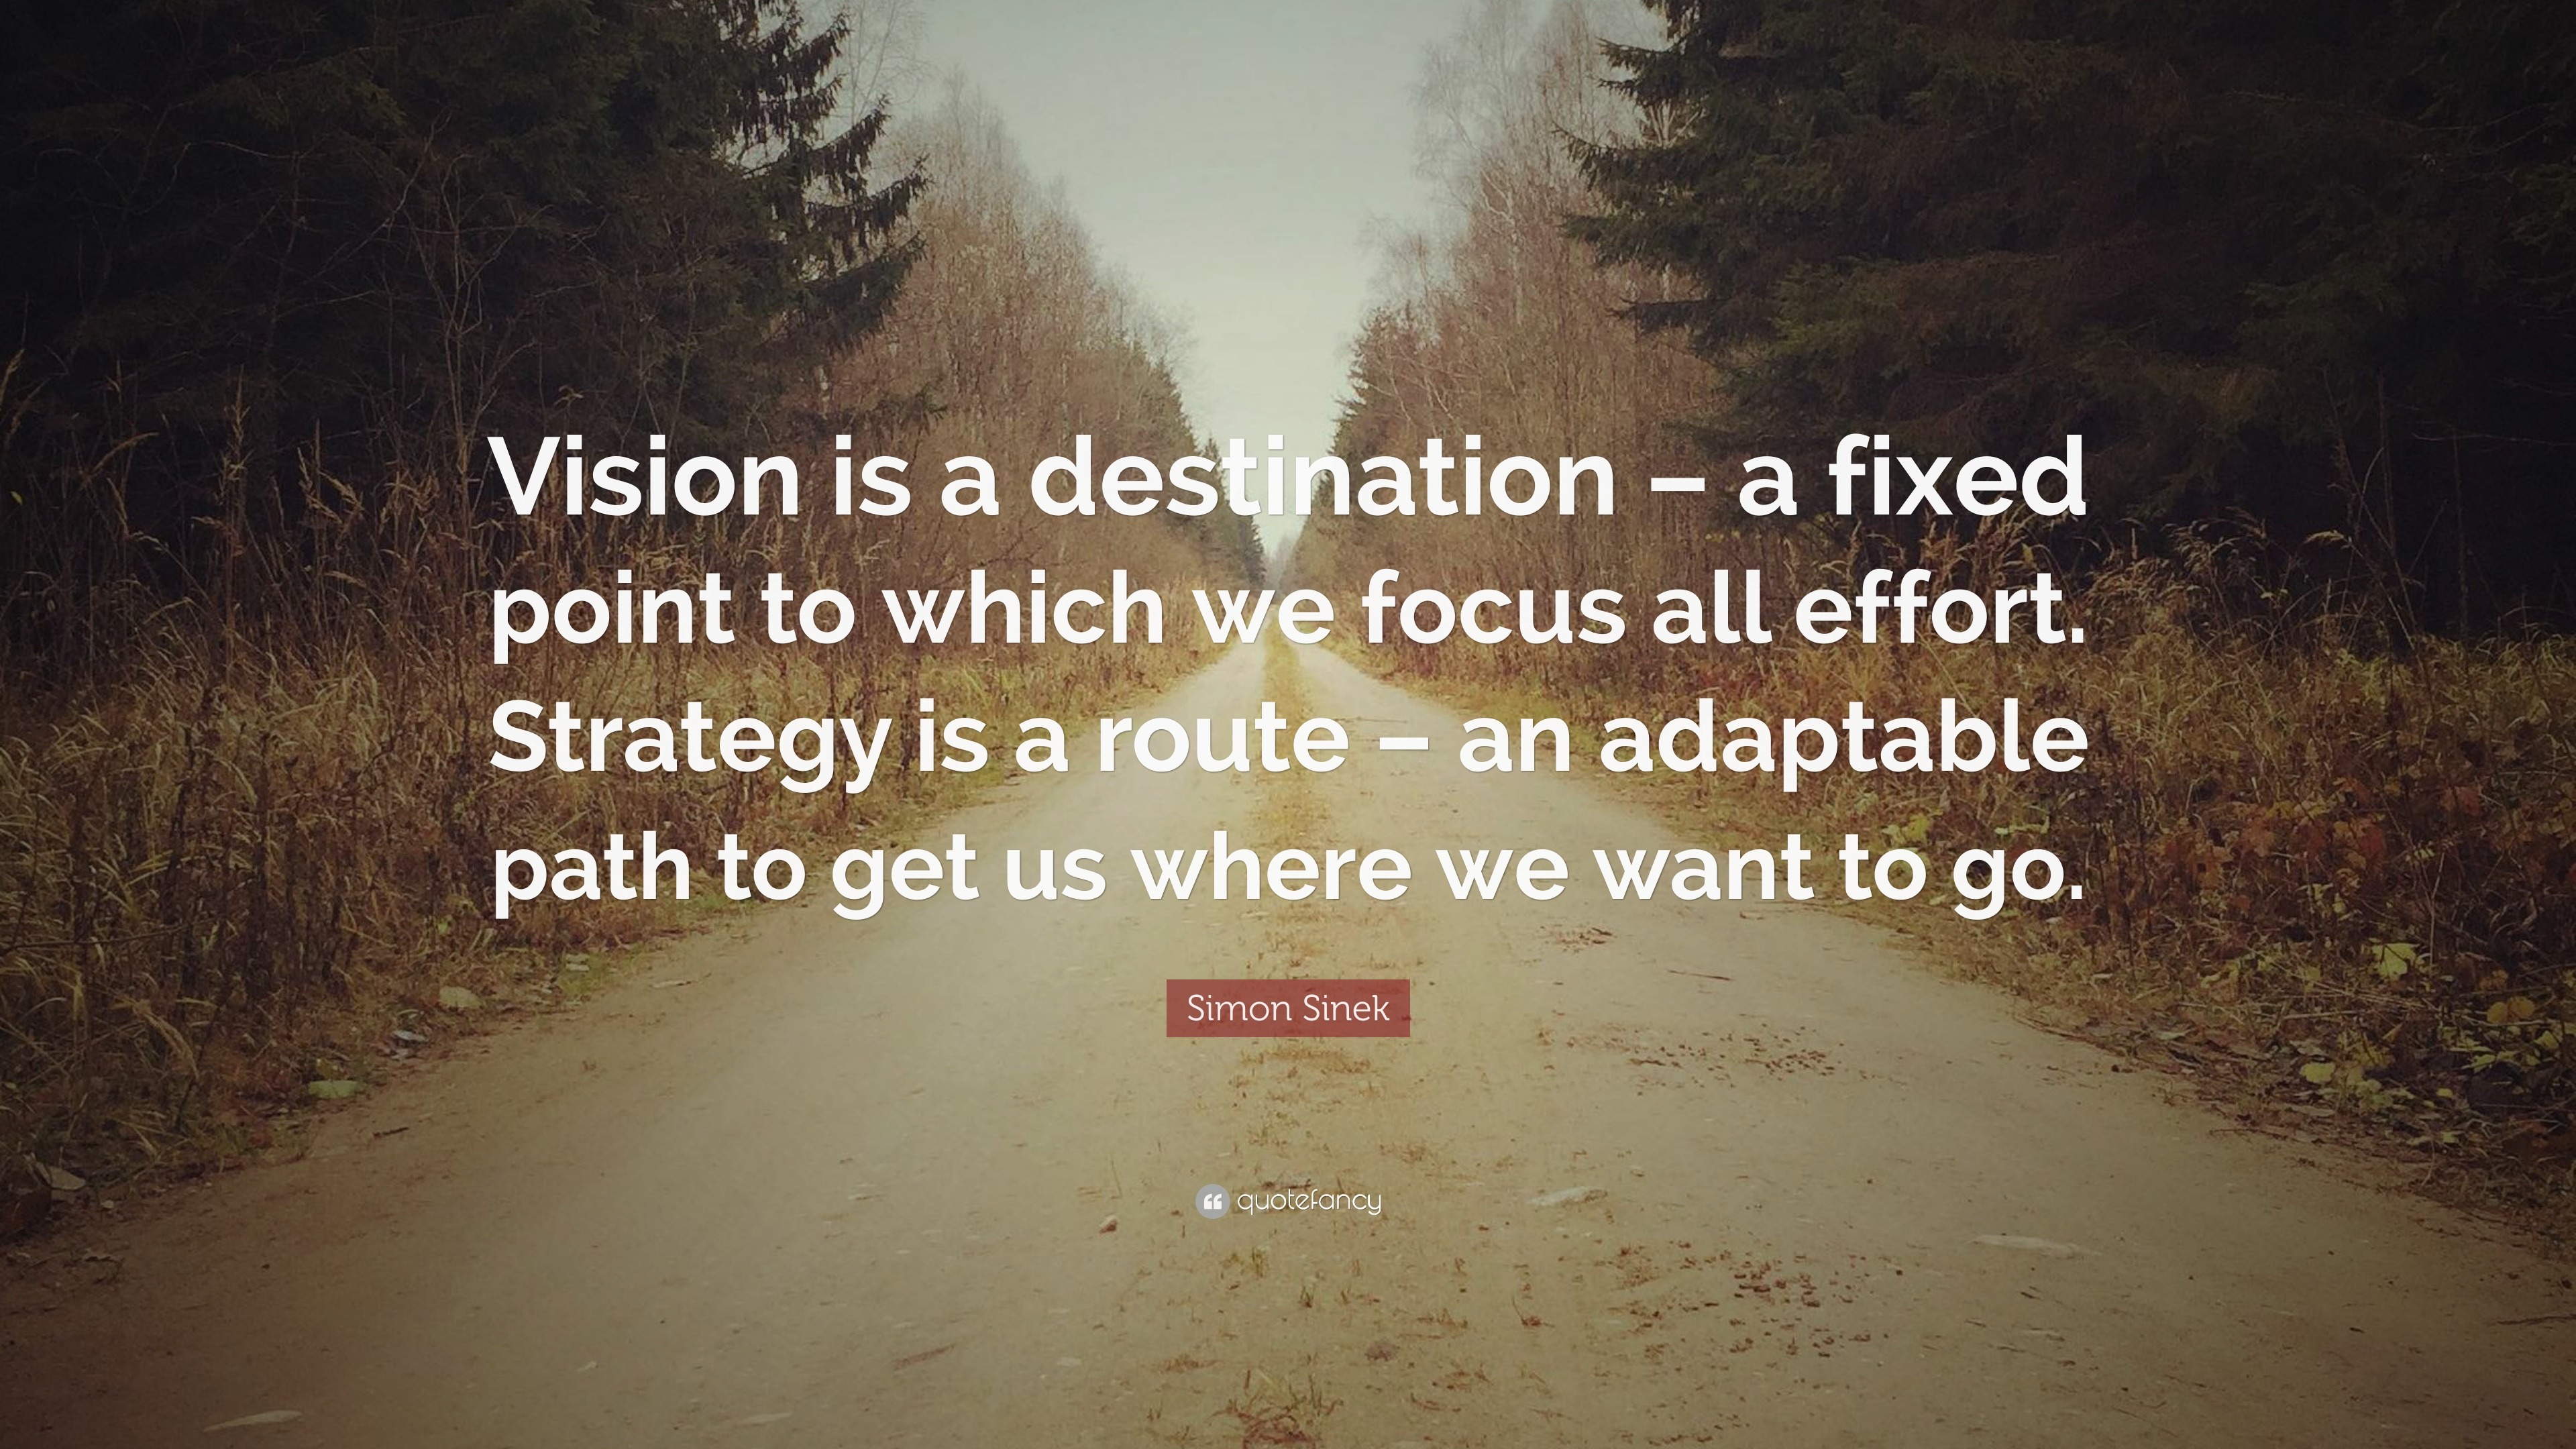 Simon Sinek Quote “Vision is a destination a fixed